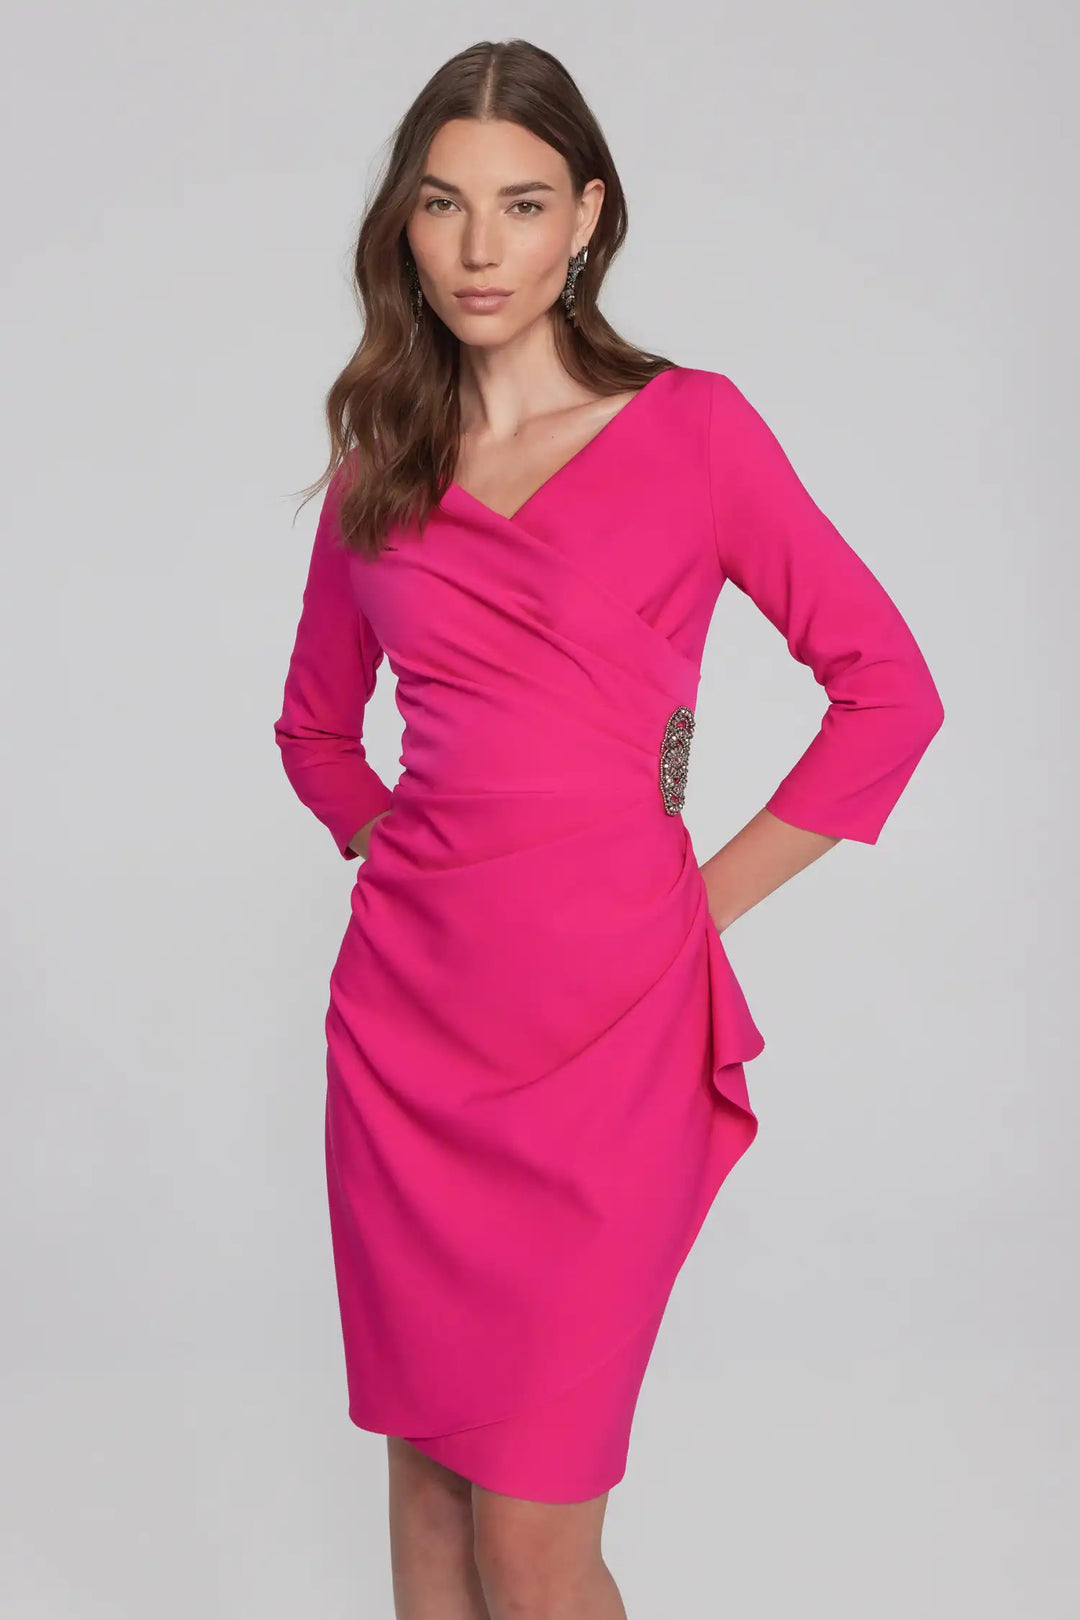 "Joseph Ribkoff Shocking Pink Wrap Dress Style 241705"